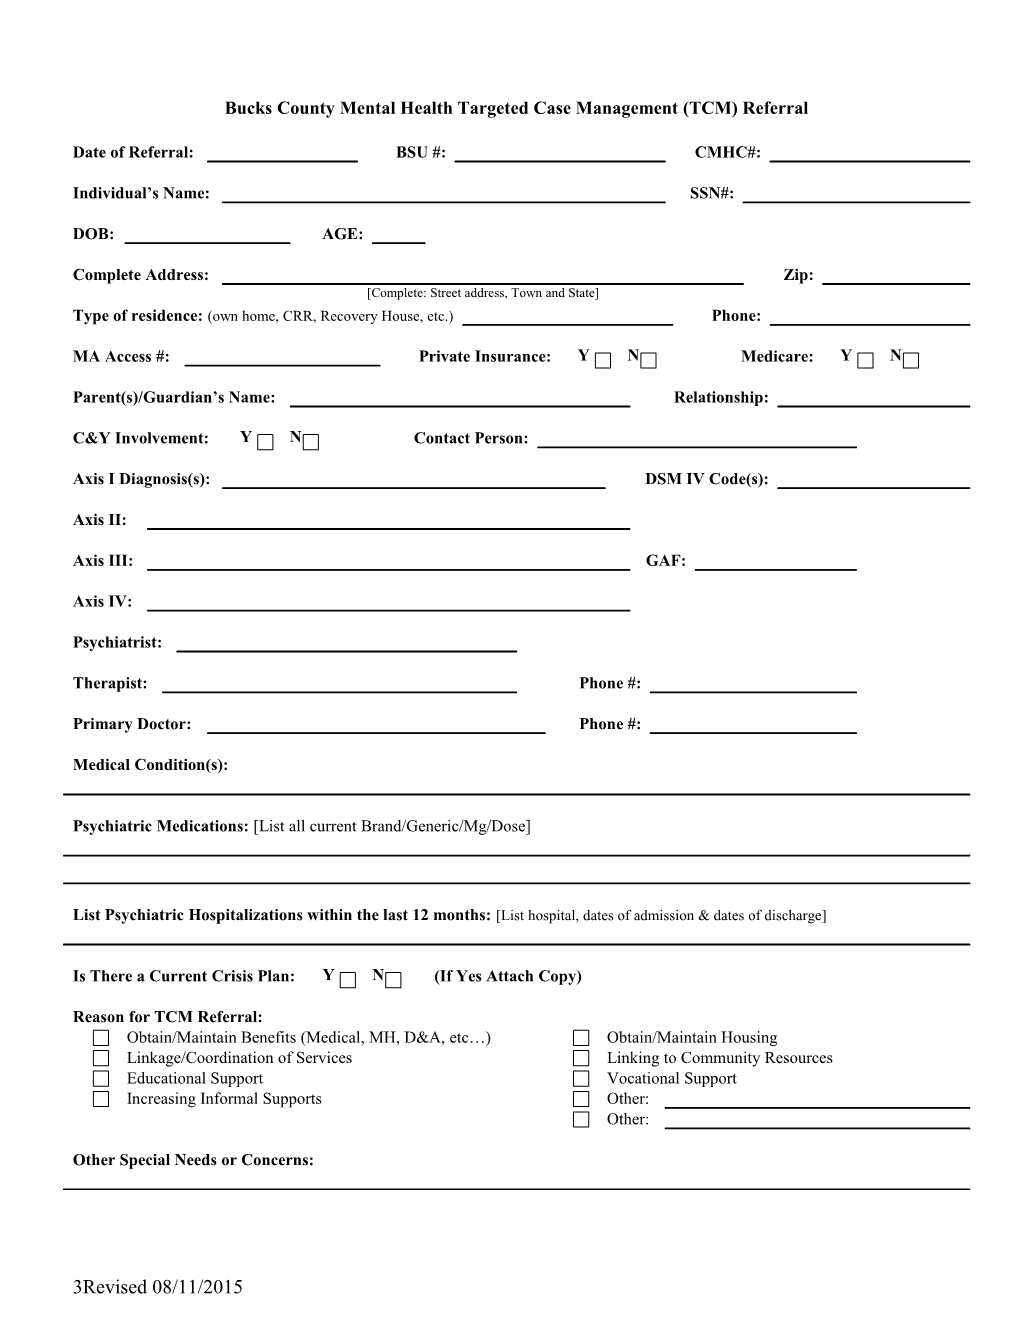 Bucks County Intensive Case Management/Resource Coordination Referral Form